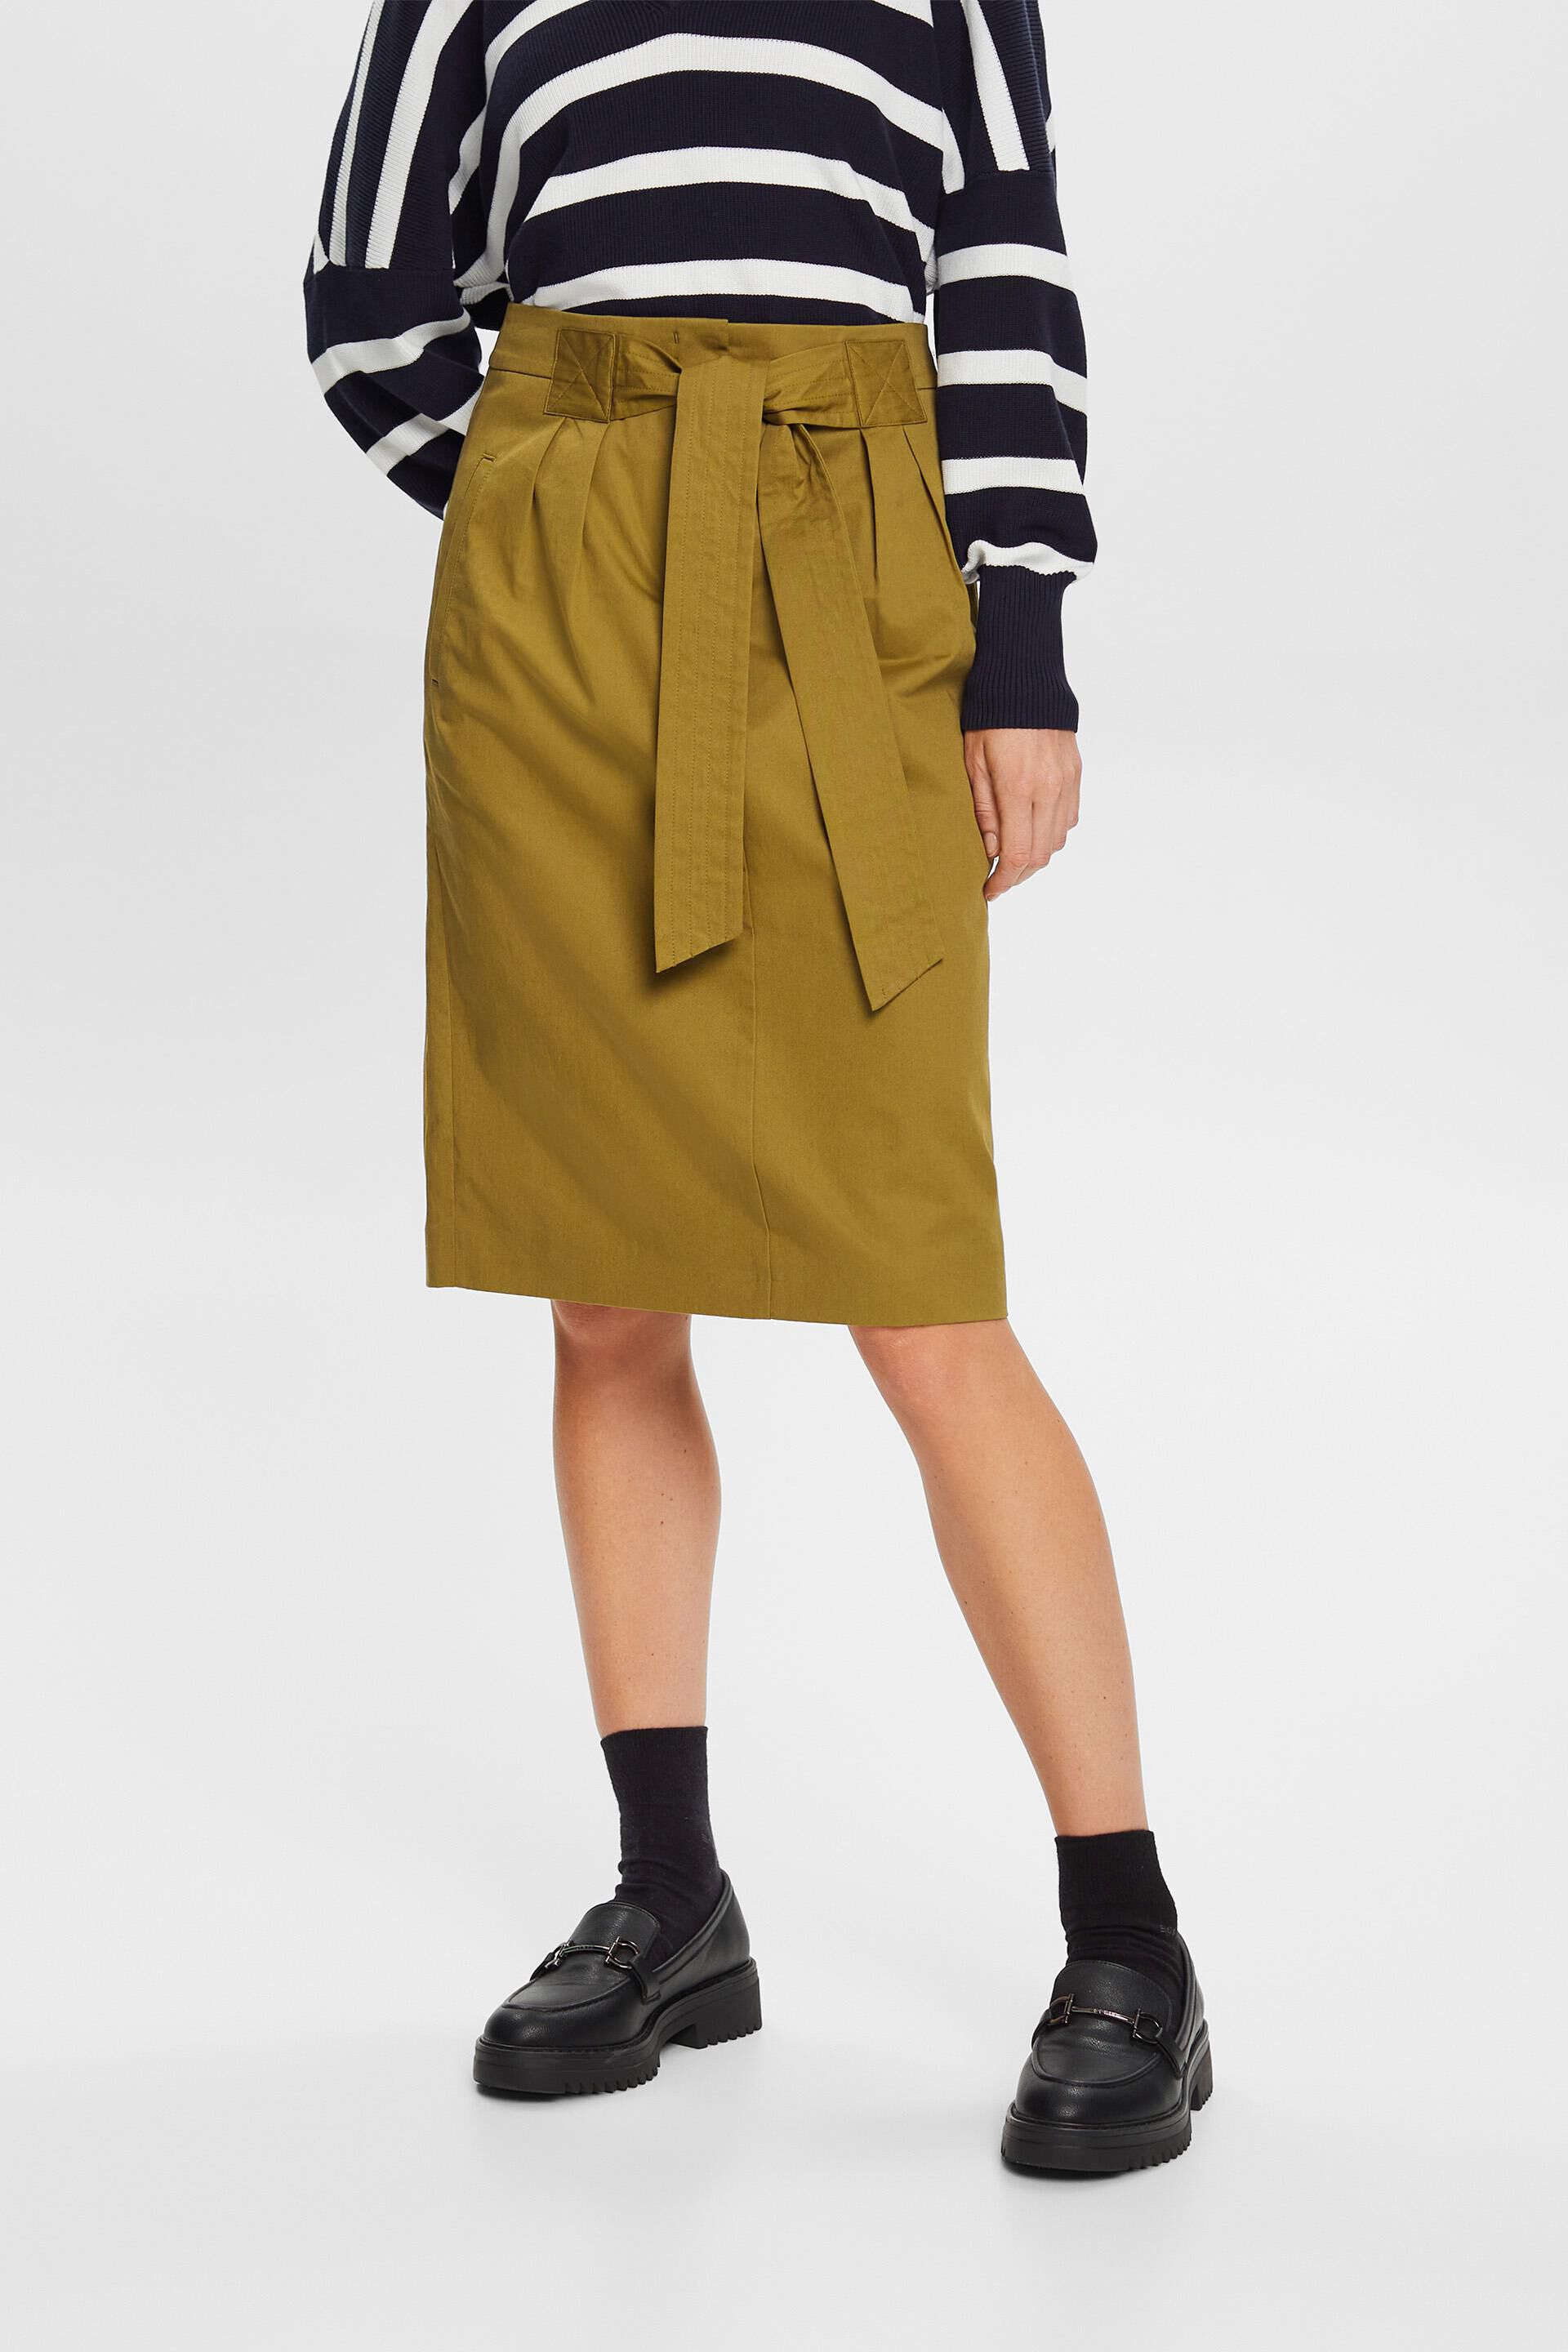 Esprit cotton 100% skirt, length knee Belted